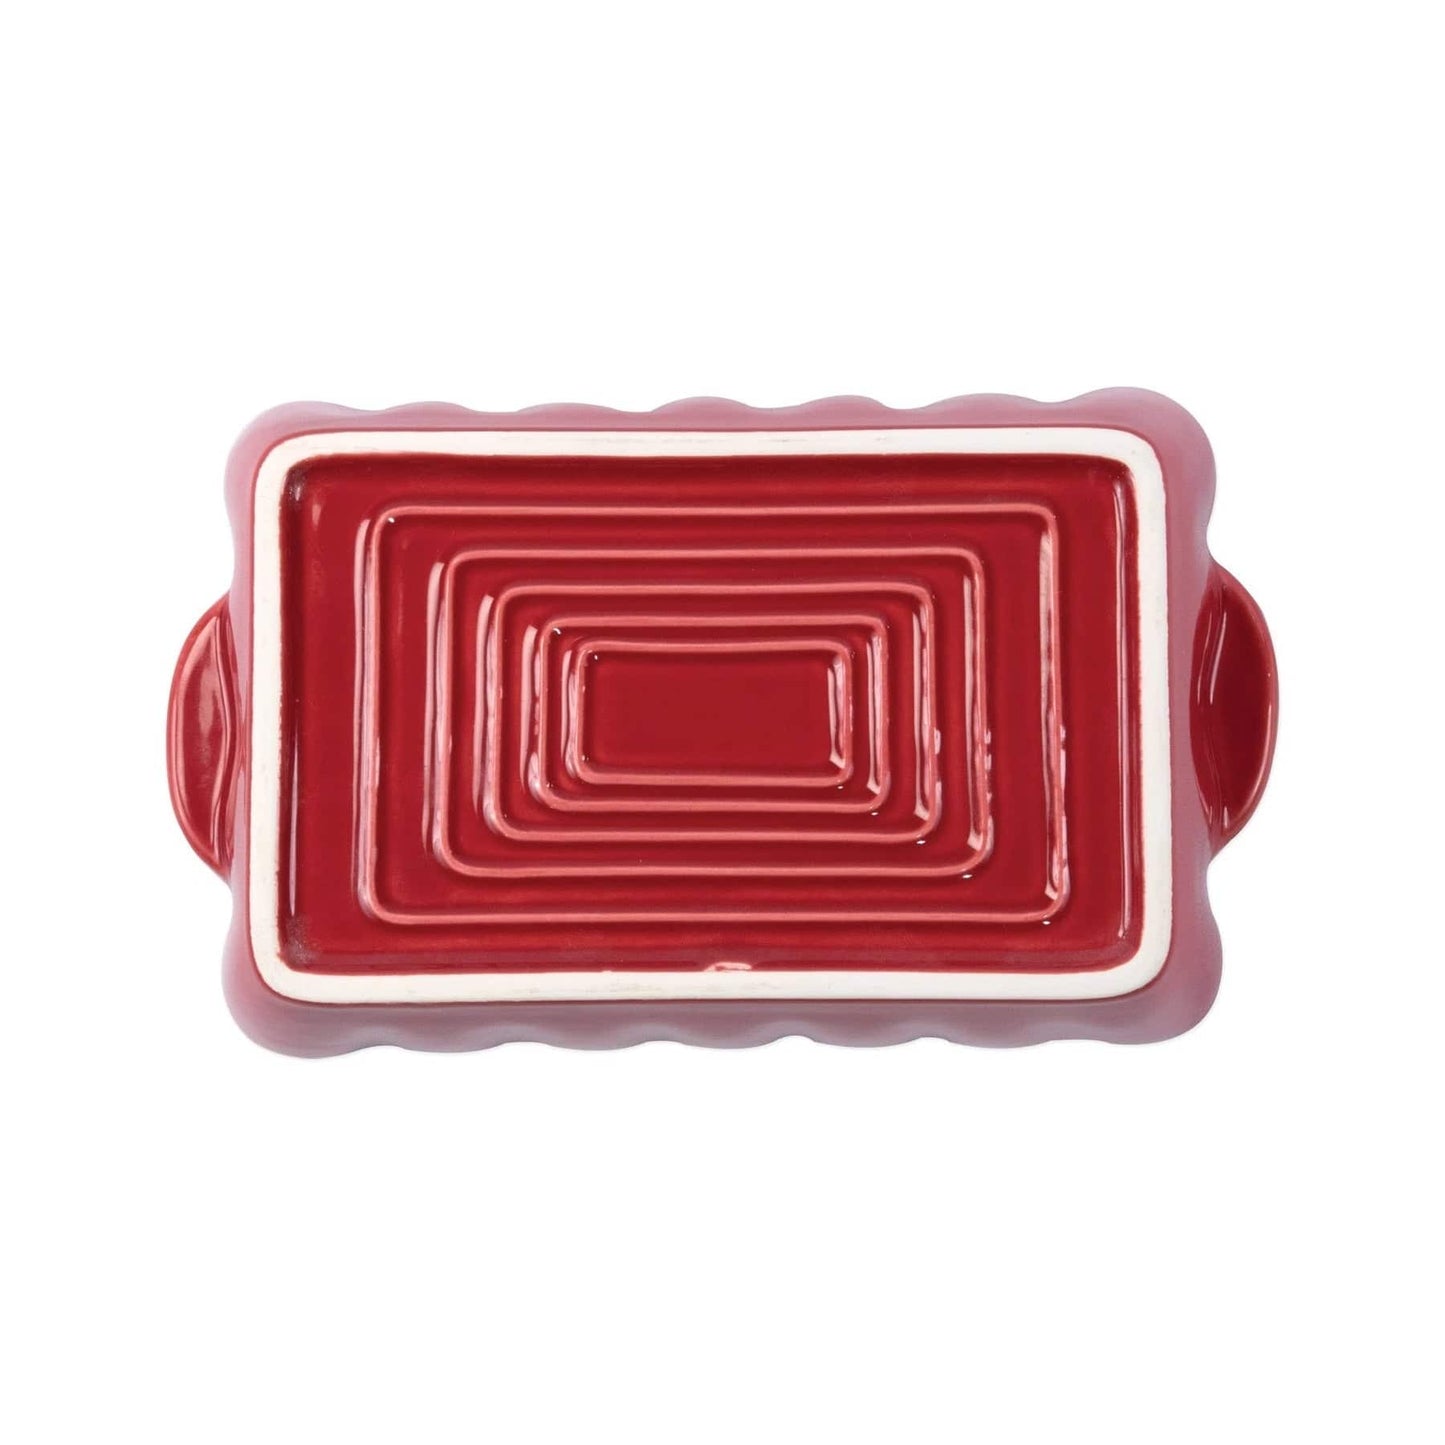 Vietri - ITALIAN BAKERS SMALL RECTANGULAR BAKER - RED - Findlay Rowe Designs